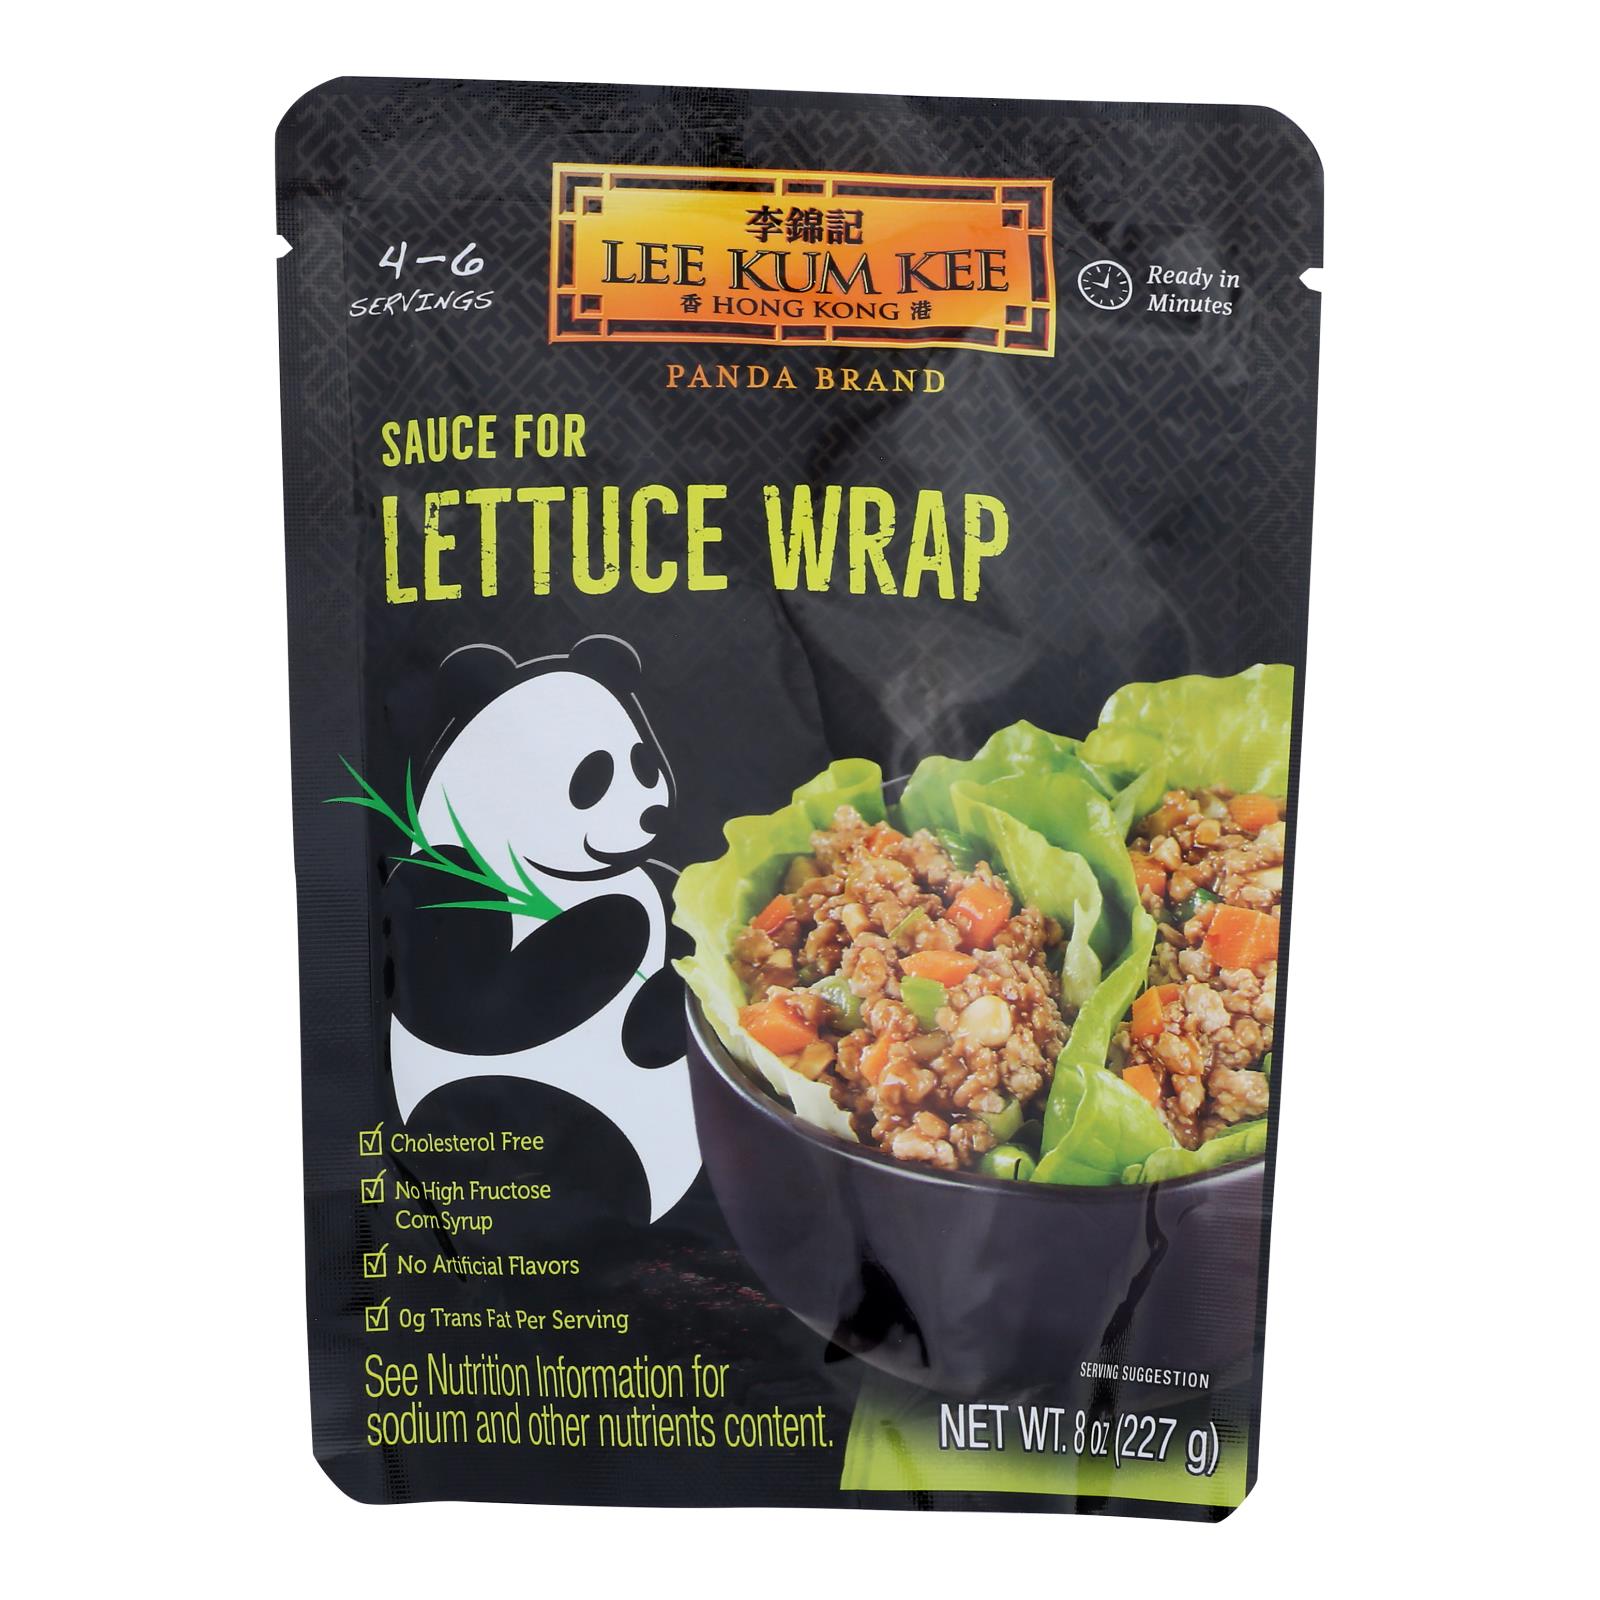 Lee Kum Kee Sauce Pandra Brand Sauce For Lettuce Wrap - 8 Oz - Case Of 6